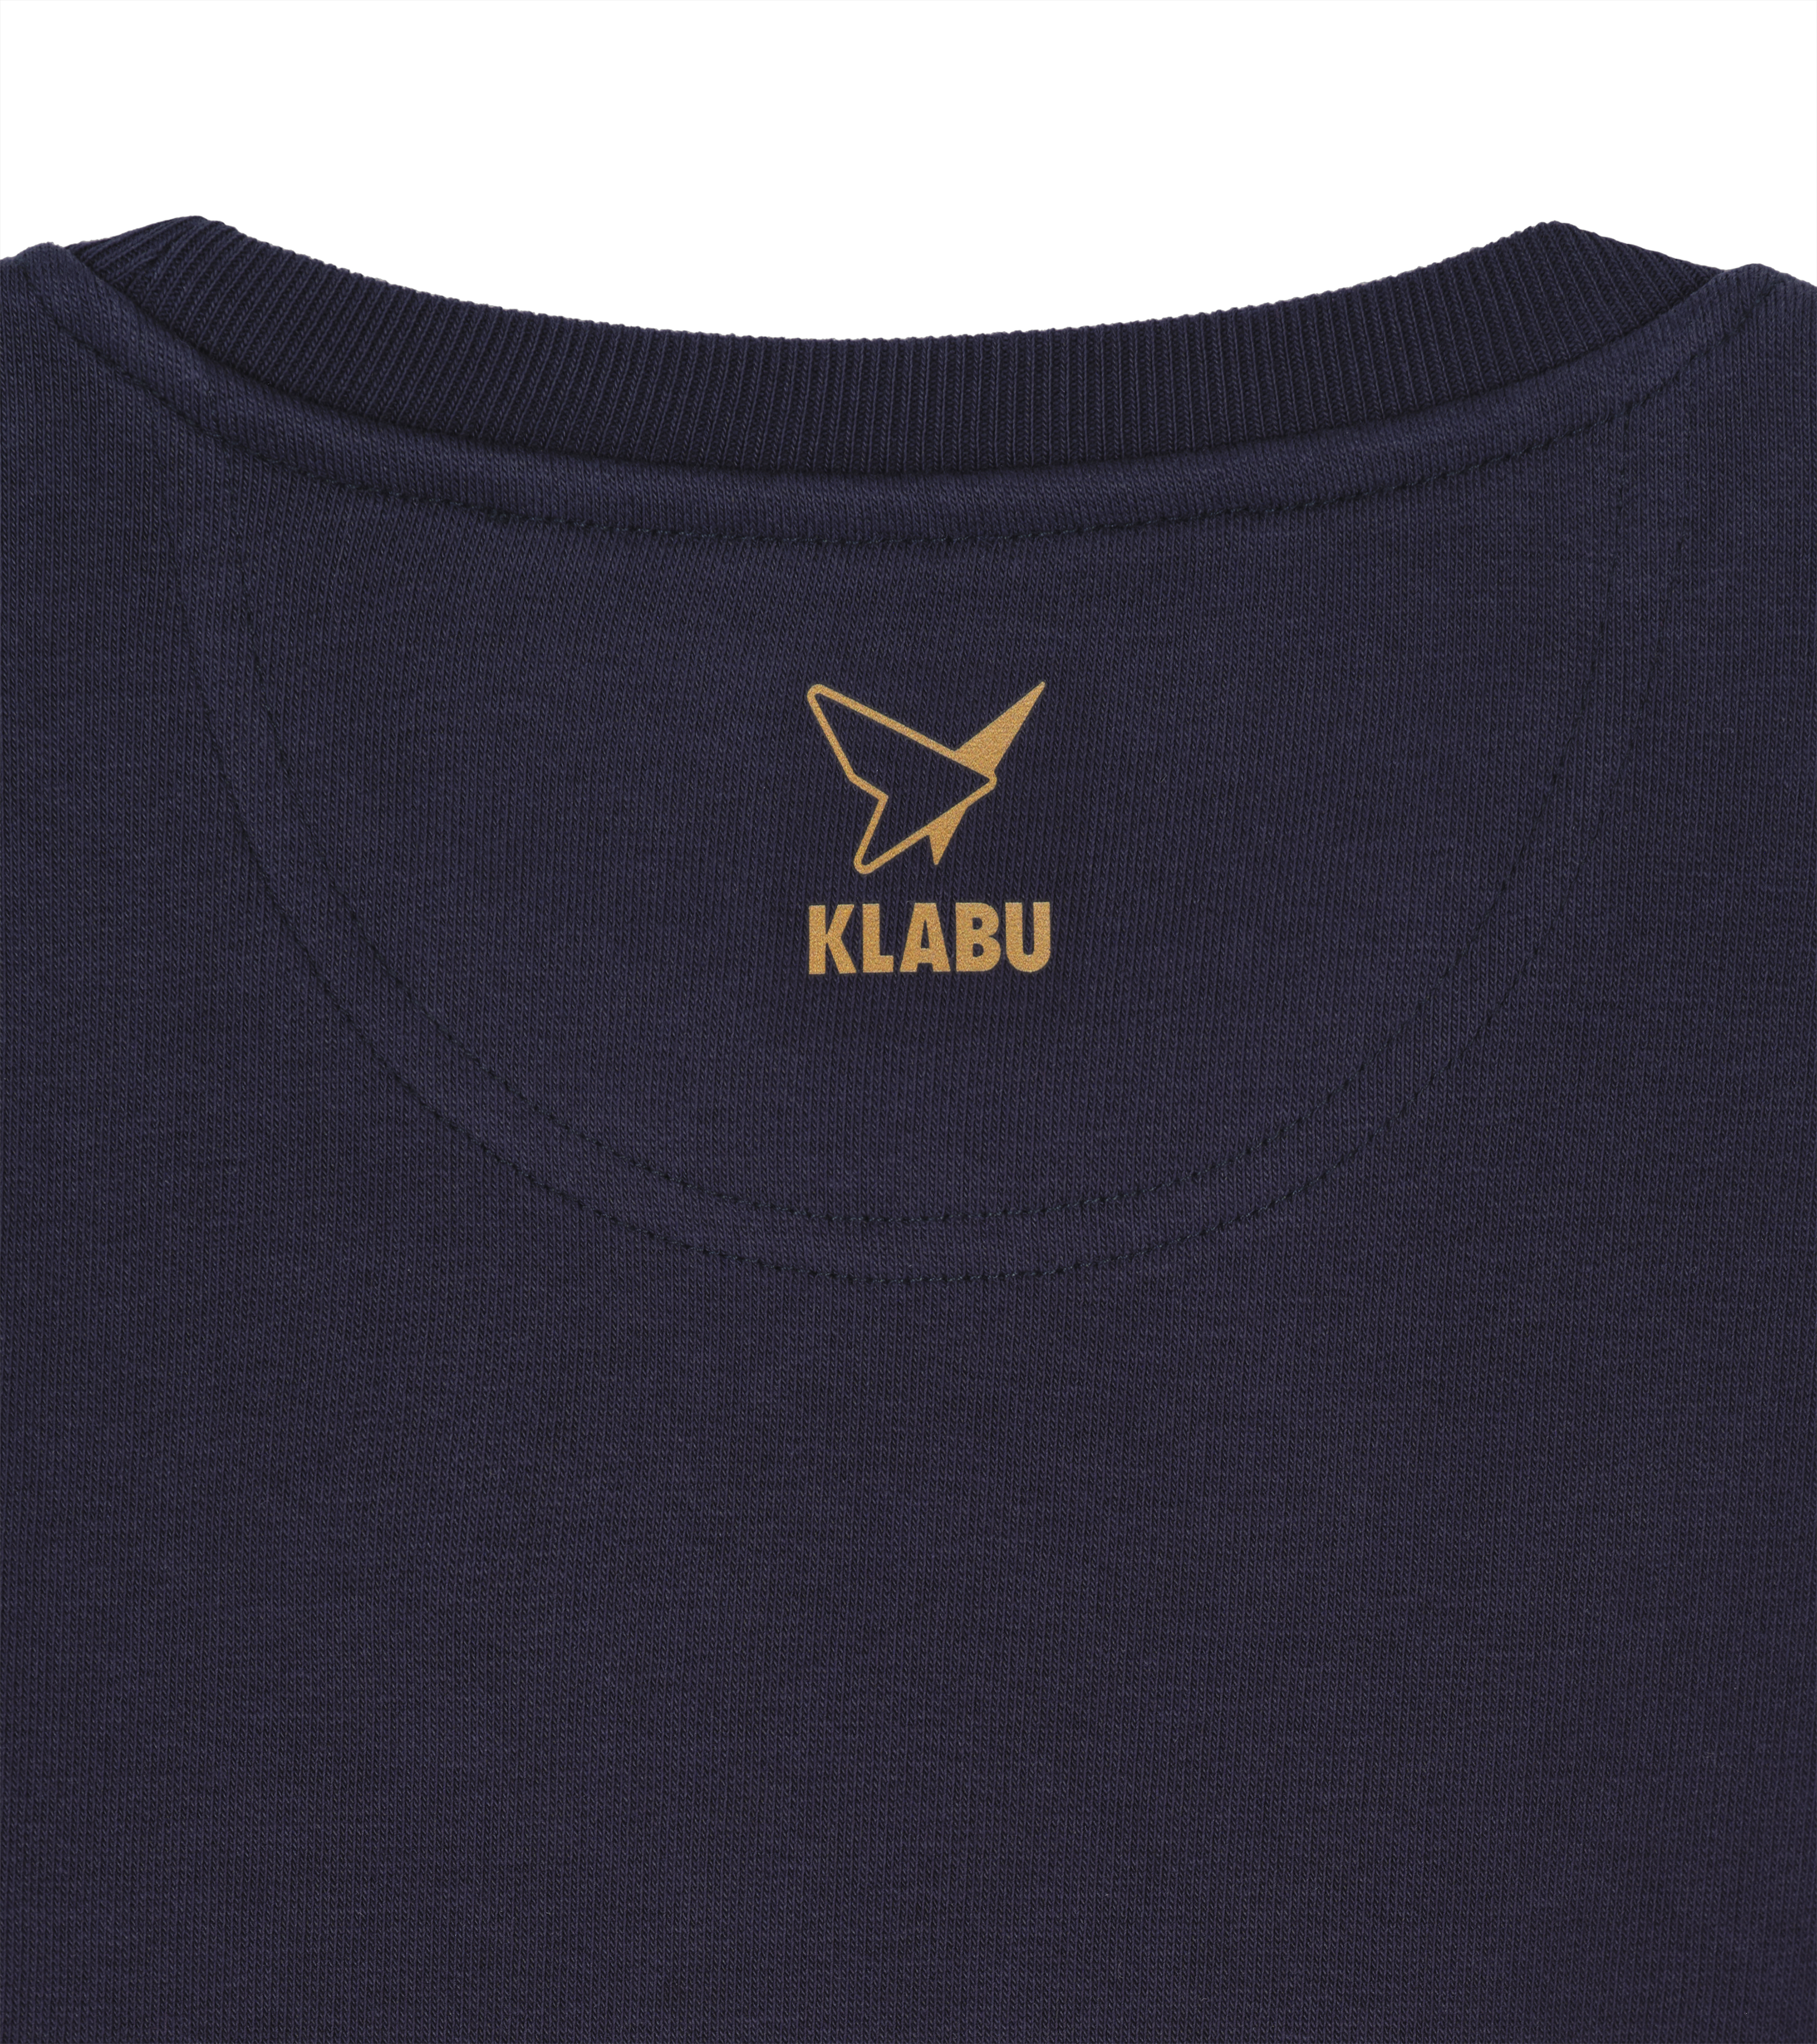 klabu navy sweater with gold logo back close up